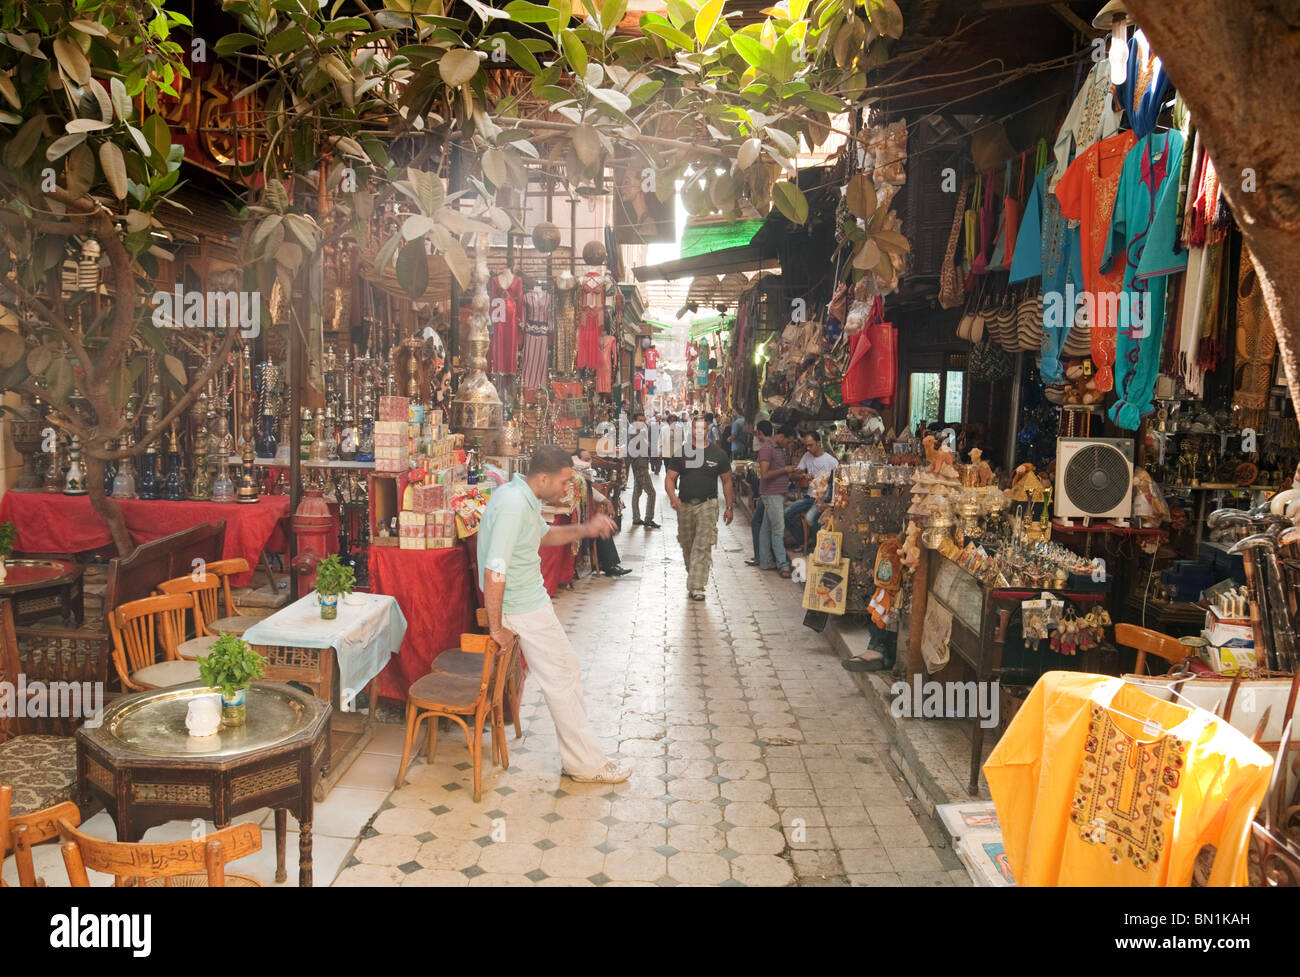 Africa market; A shaft of sunlight in a street scene in the Khan el Khalili market, Cairo, the Islamic quarter, Cairo Egypt Africa Stock Photo